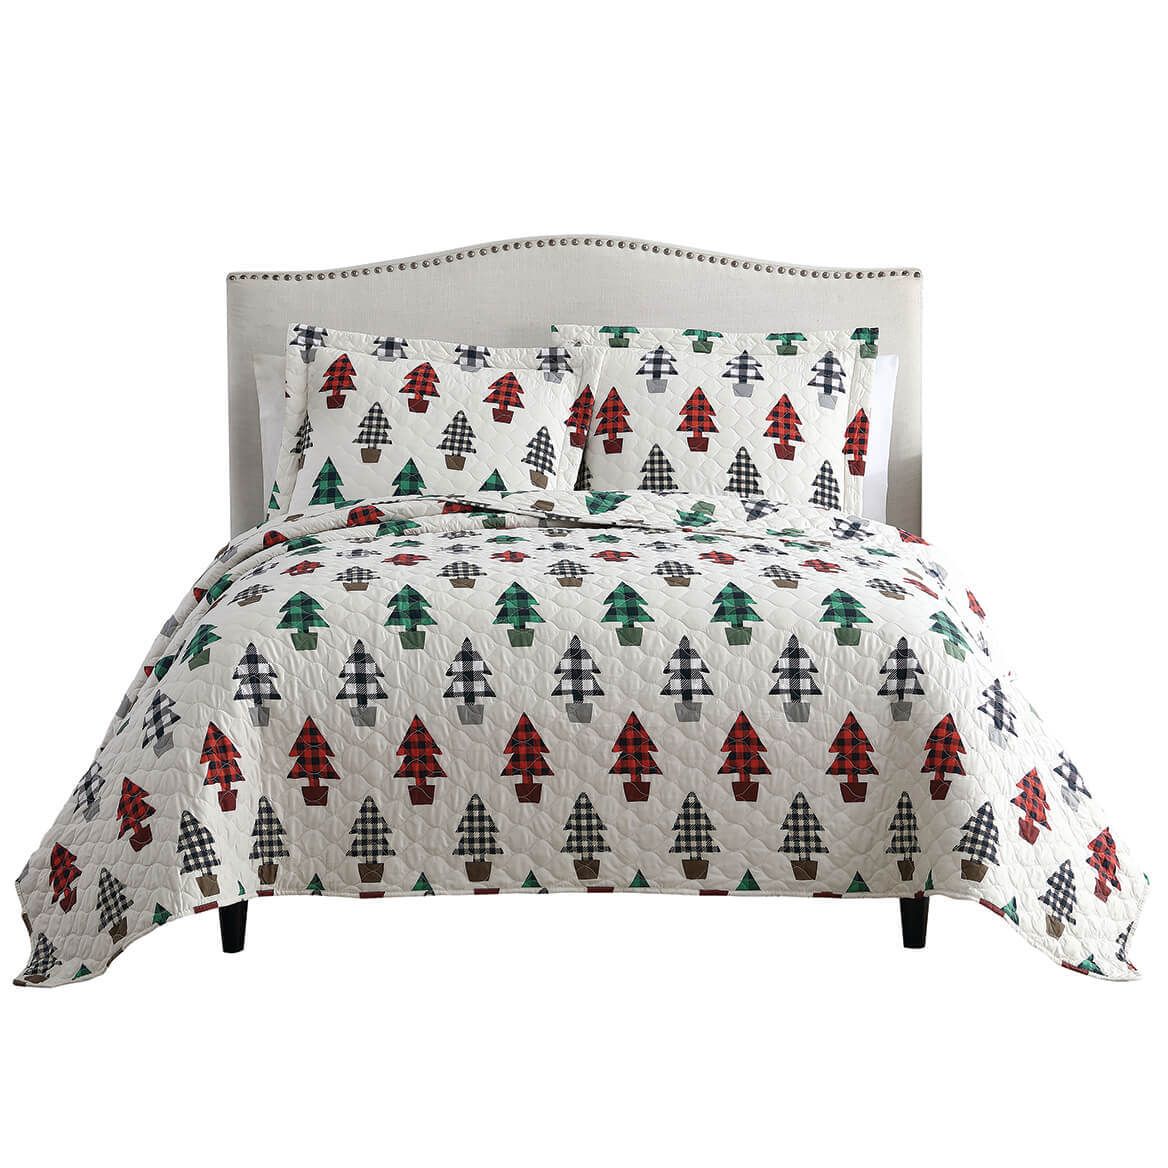 3-Pc. Holiday Plaid Tree Bedspread Set + '-' + 375902